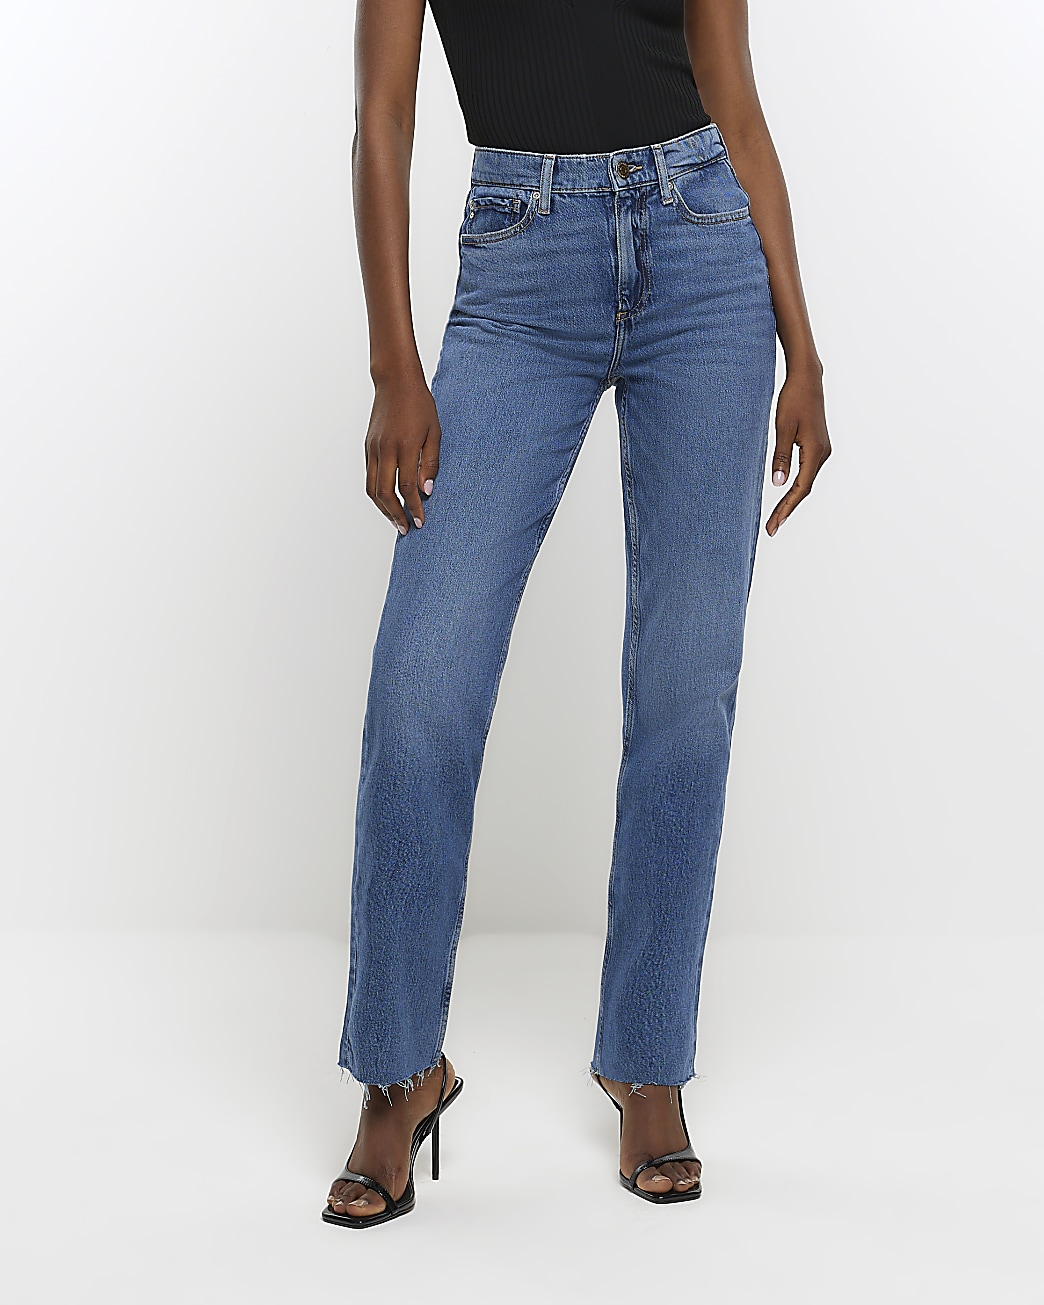 Women's Beige High-Waisted Jeans